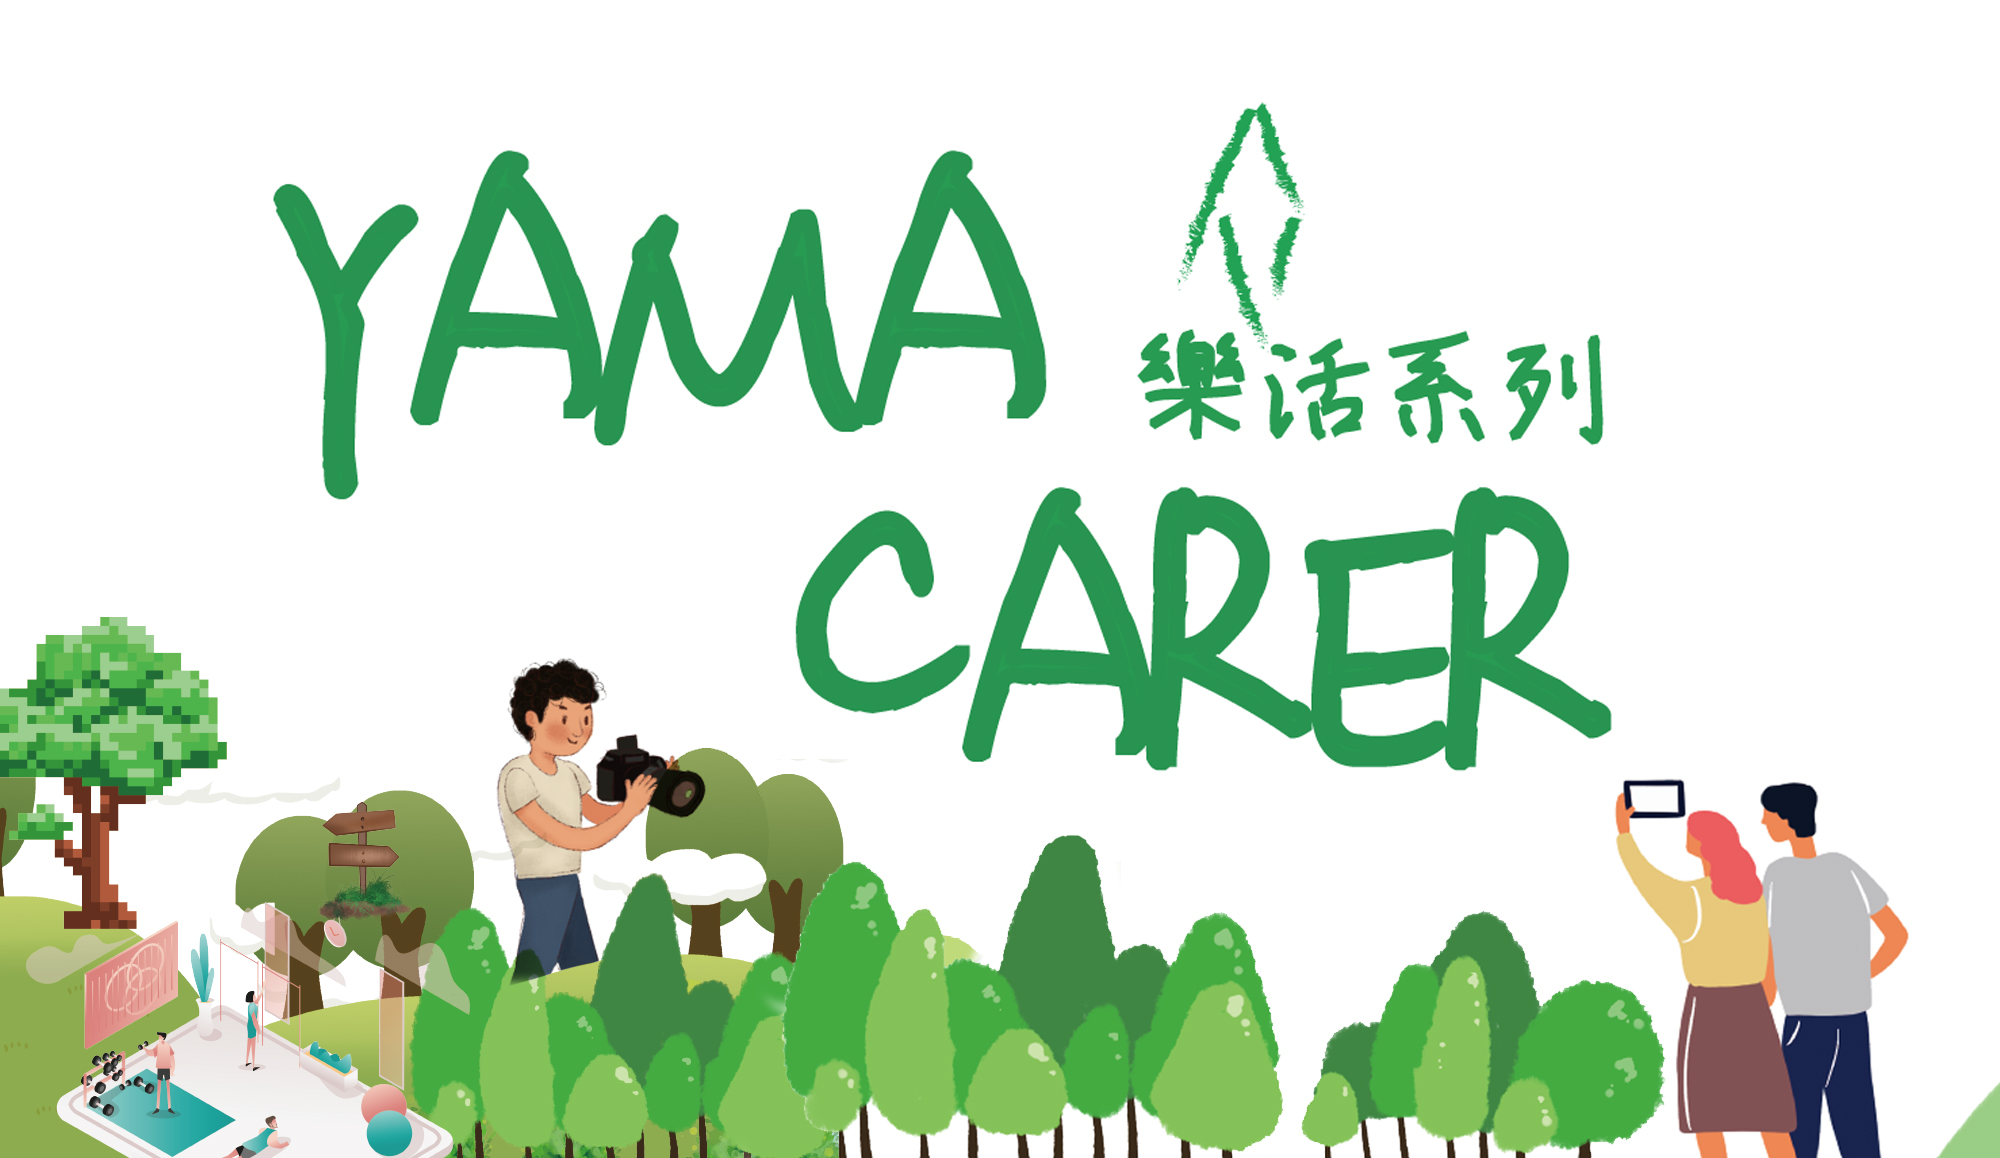 Cover Image - YAMA Carer Recruitment